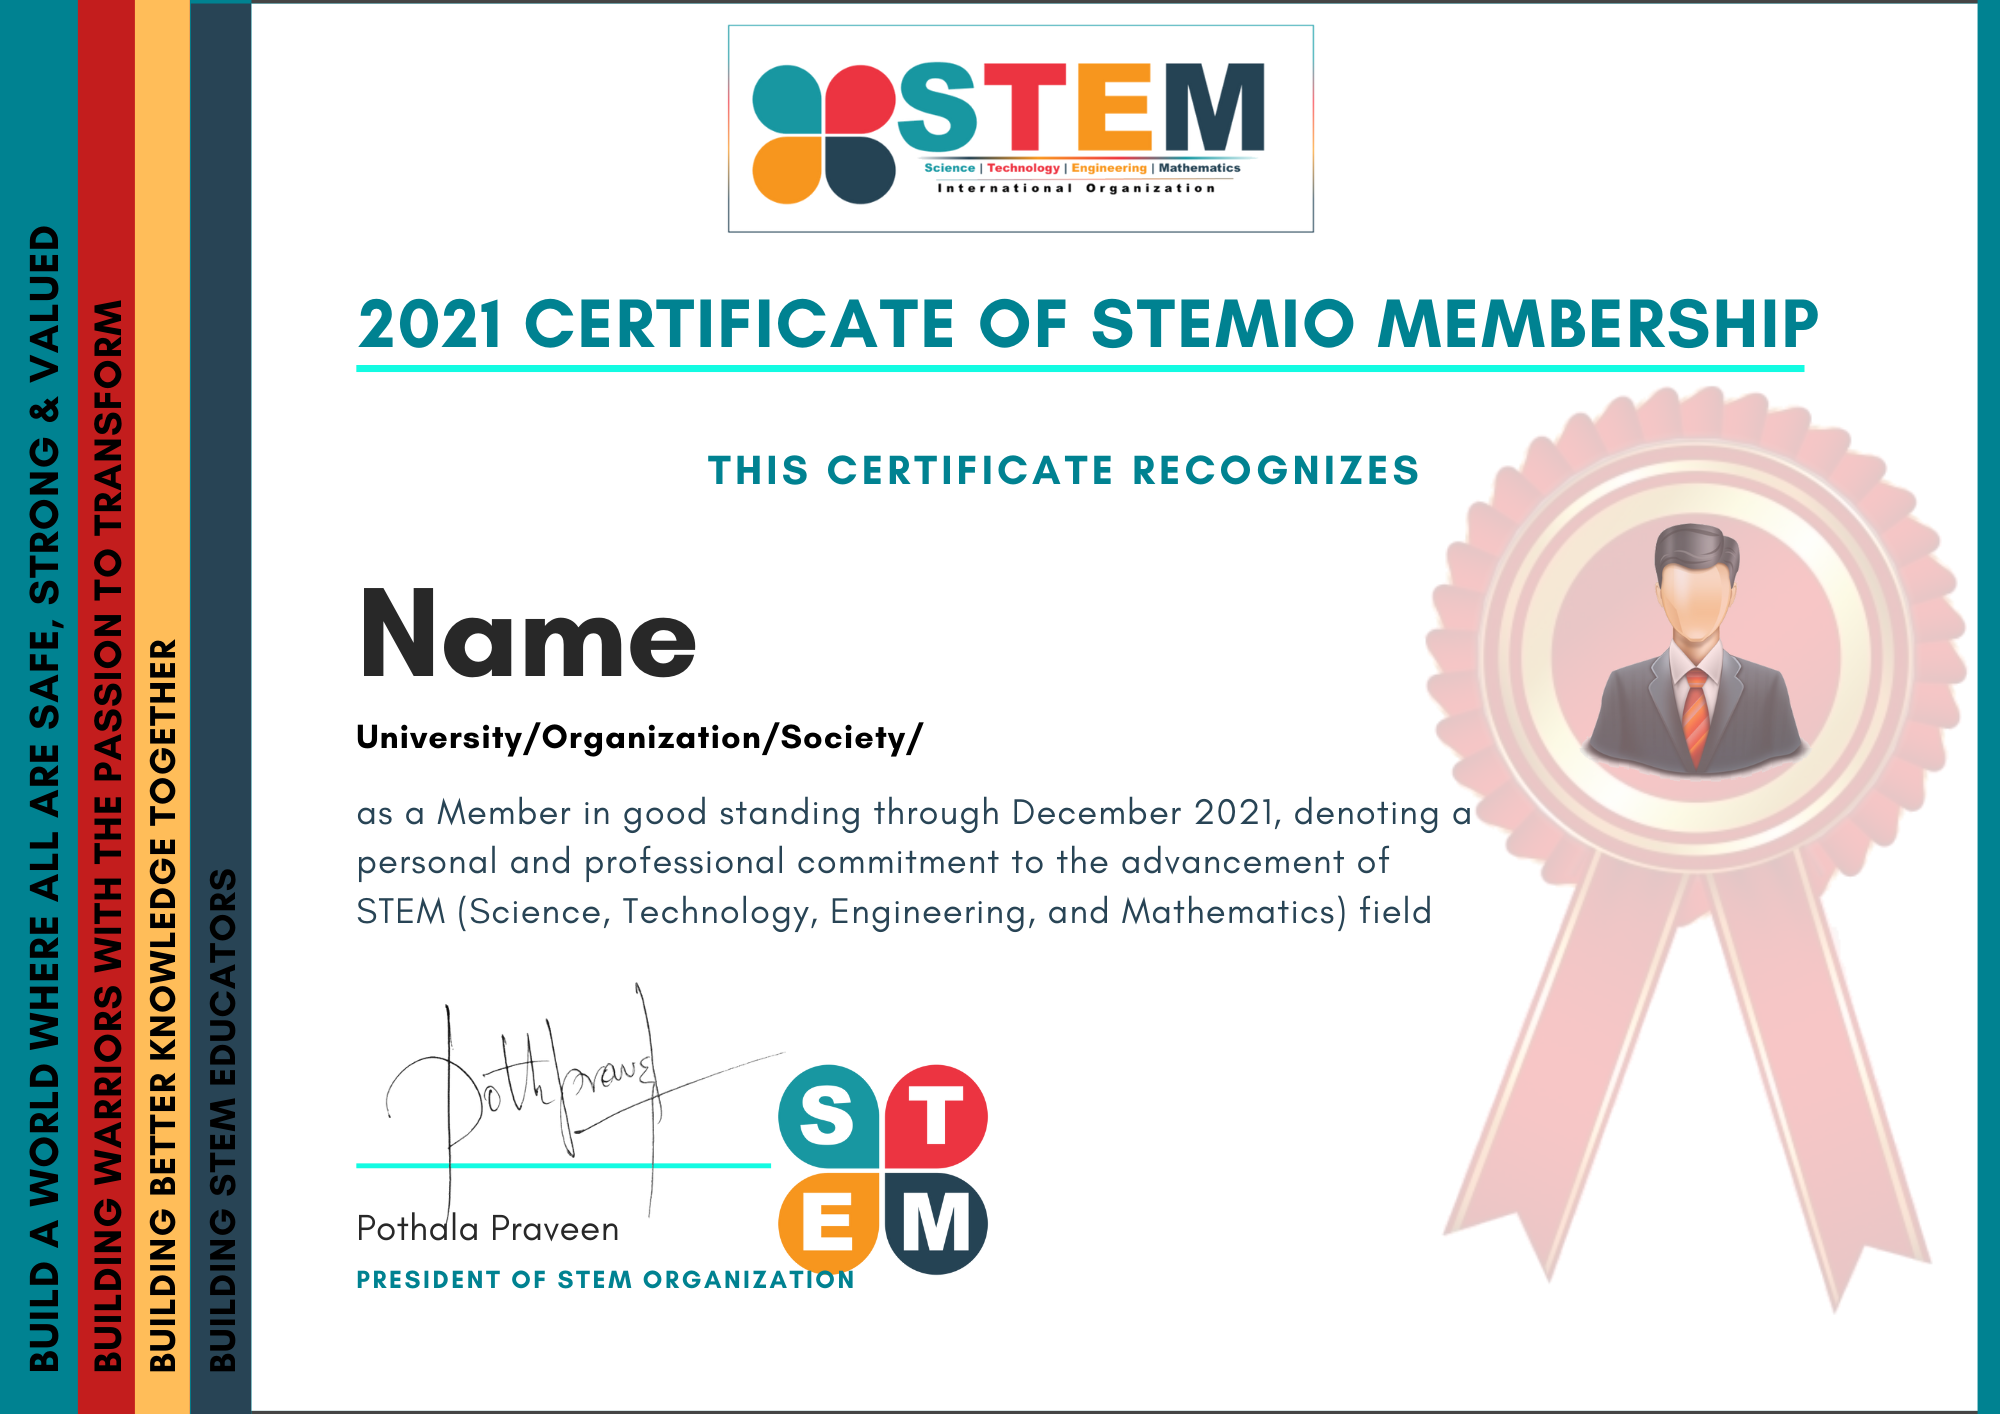 Membership Organization for STEM Society Professionals